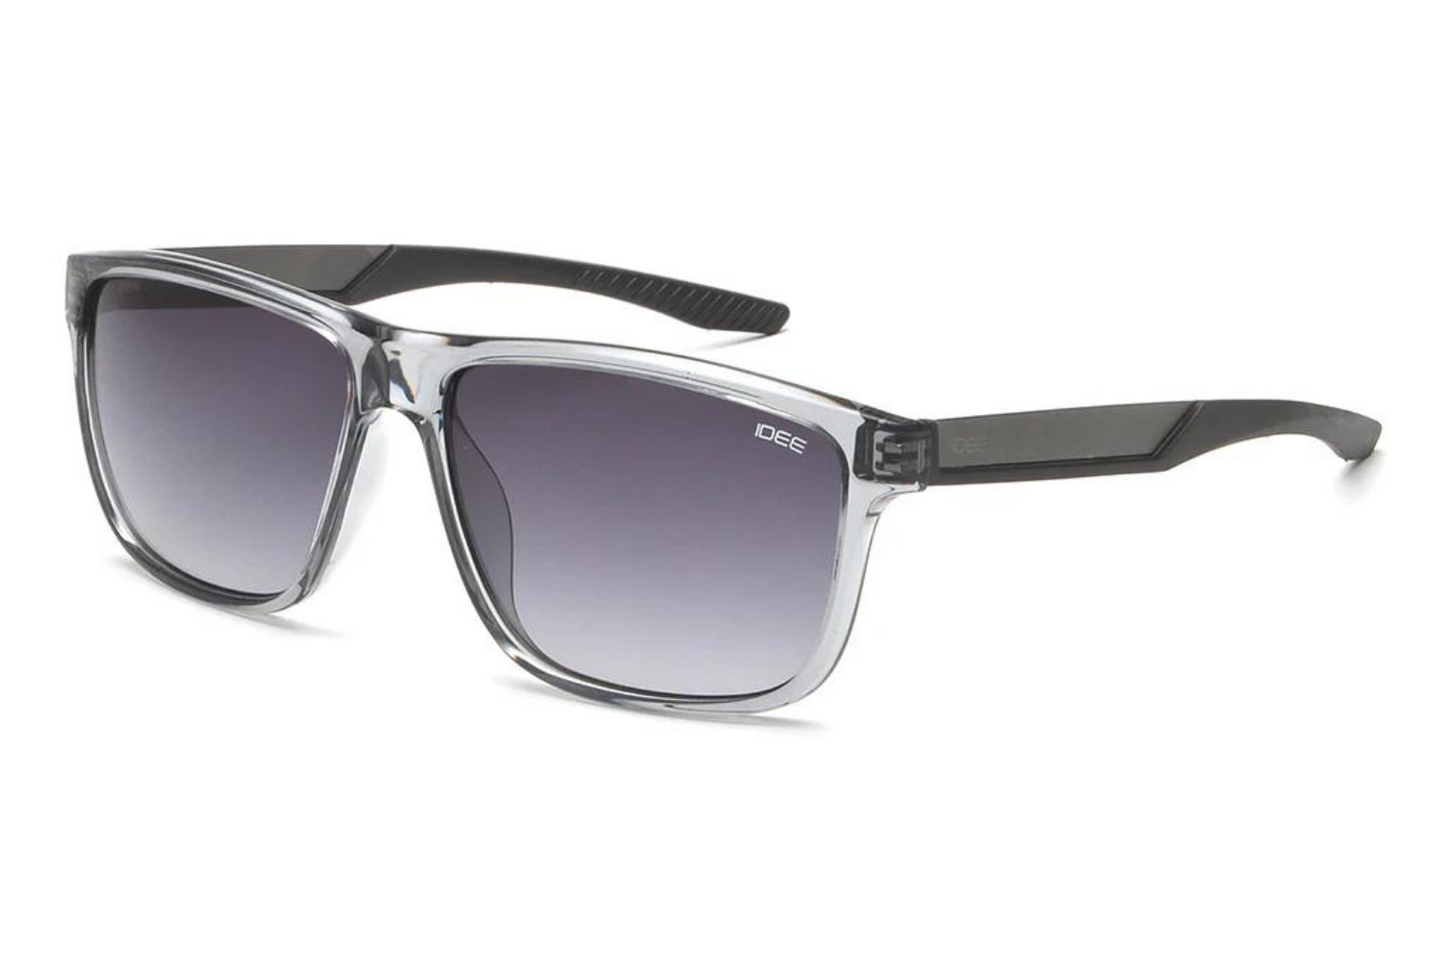 IDEE Sunglasses S3102